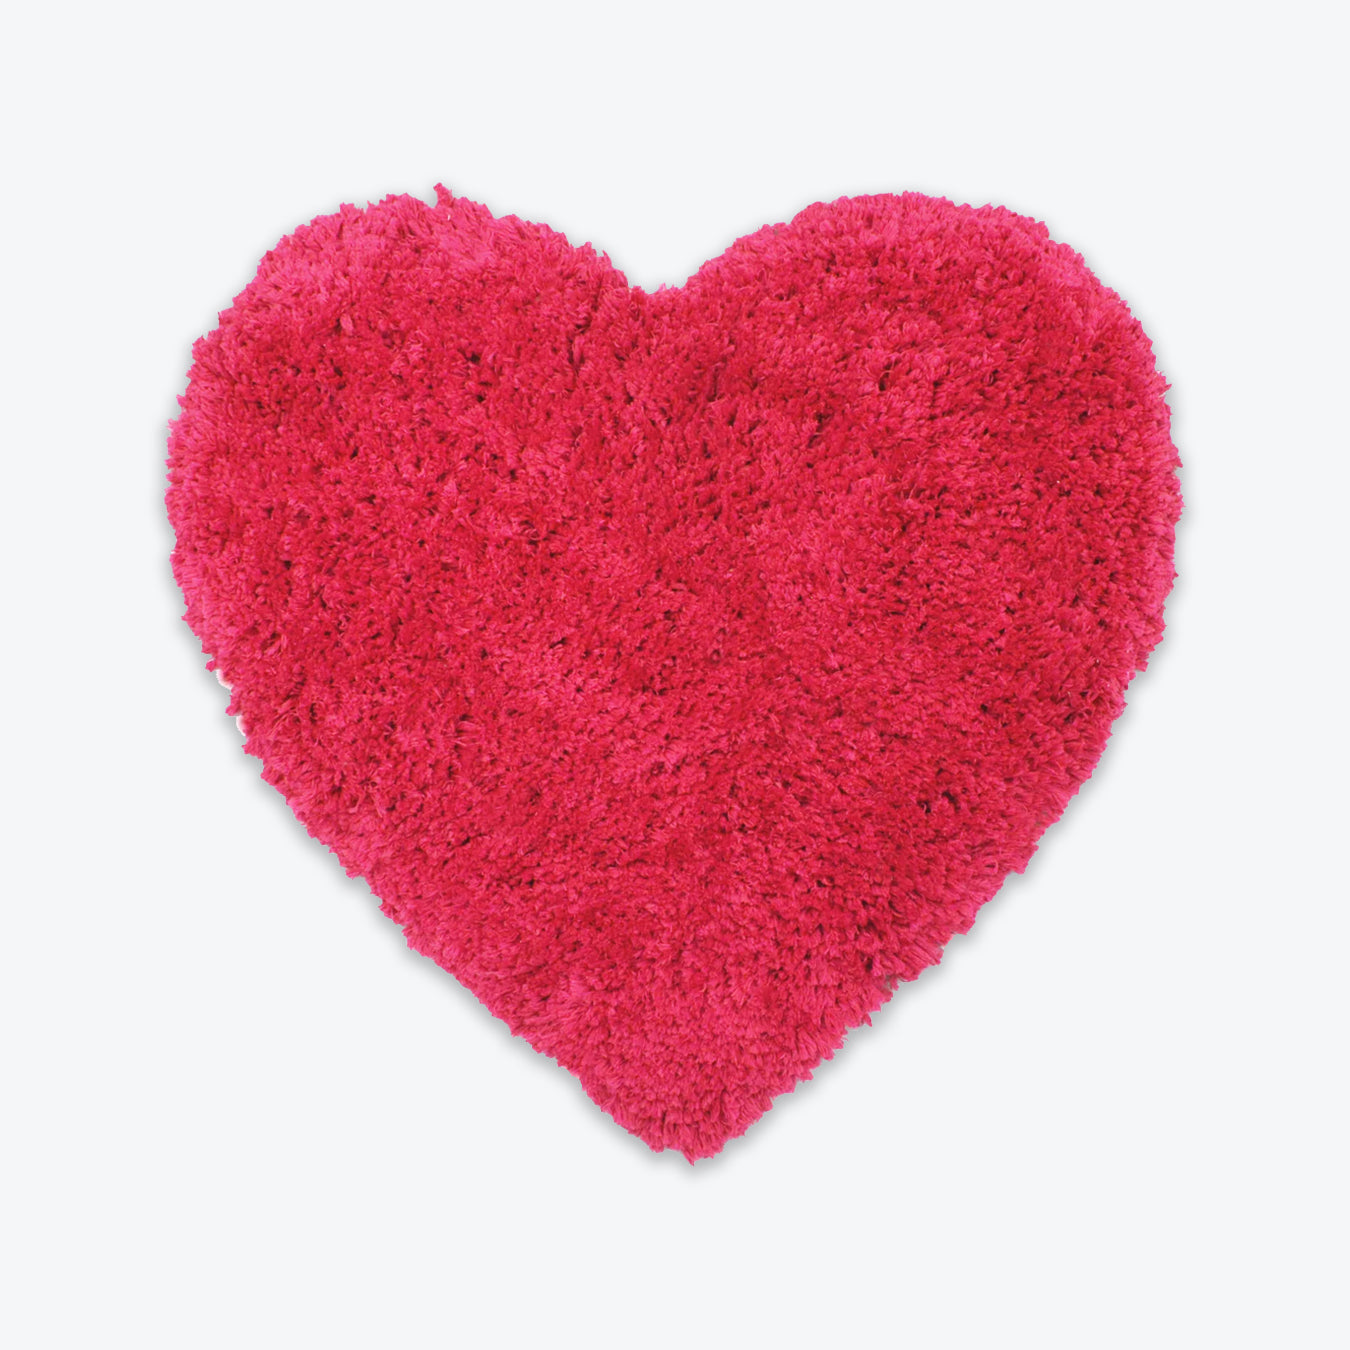 Heart Shaped Fluffy Rug - Super Soft Shaggy Pile